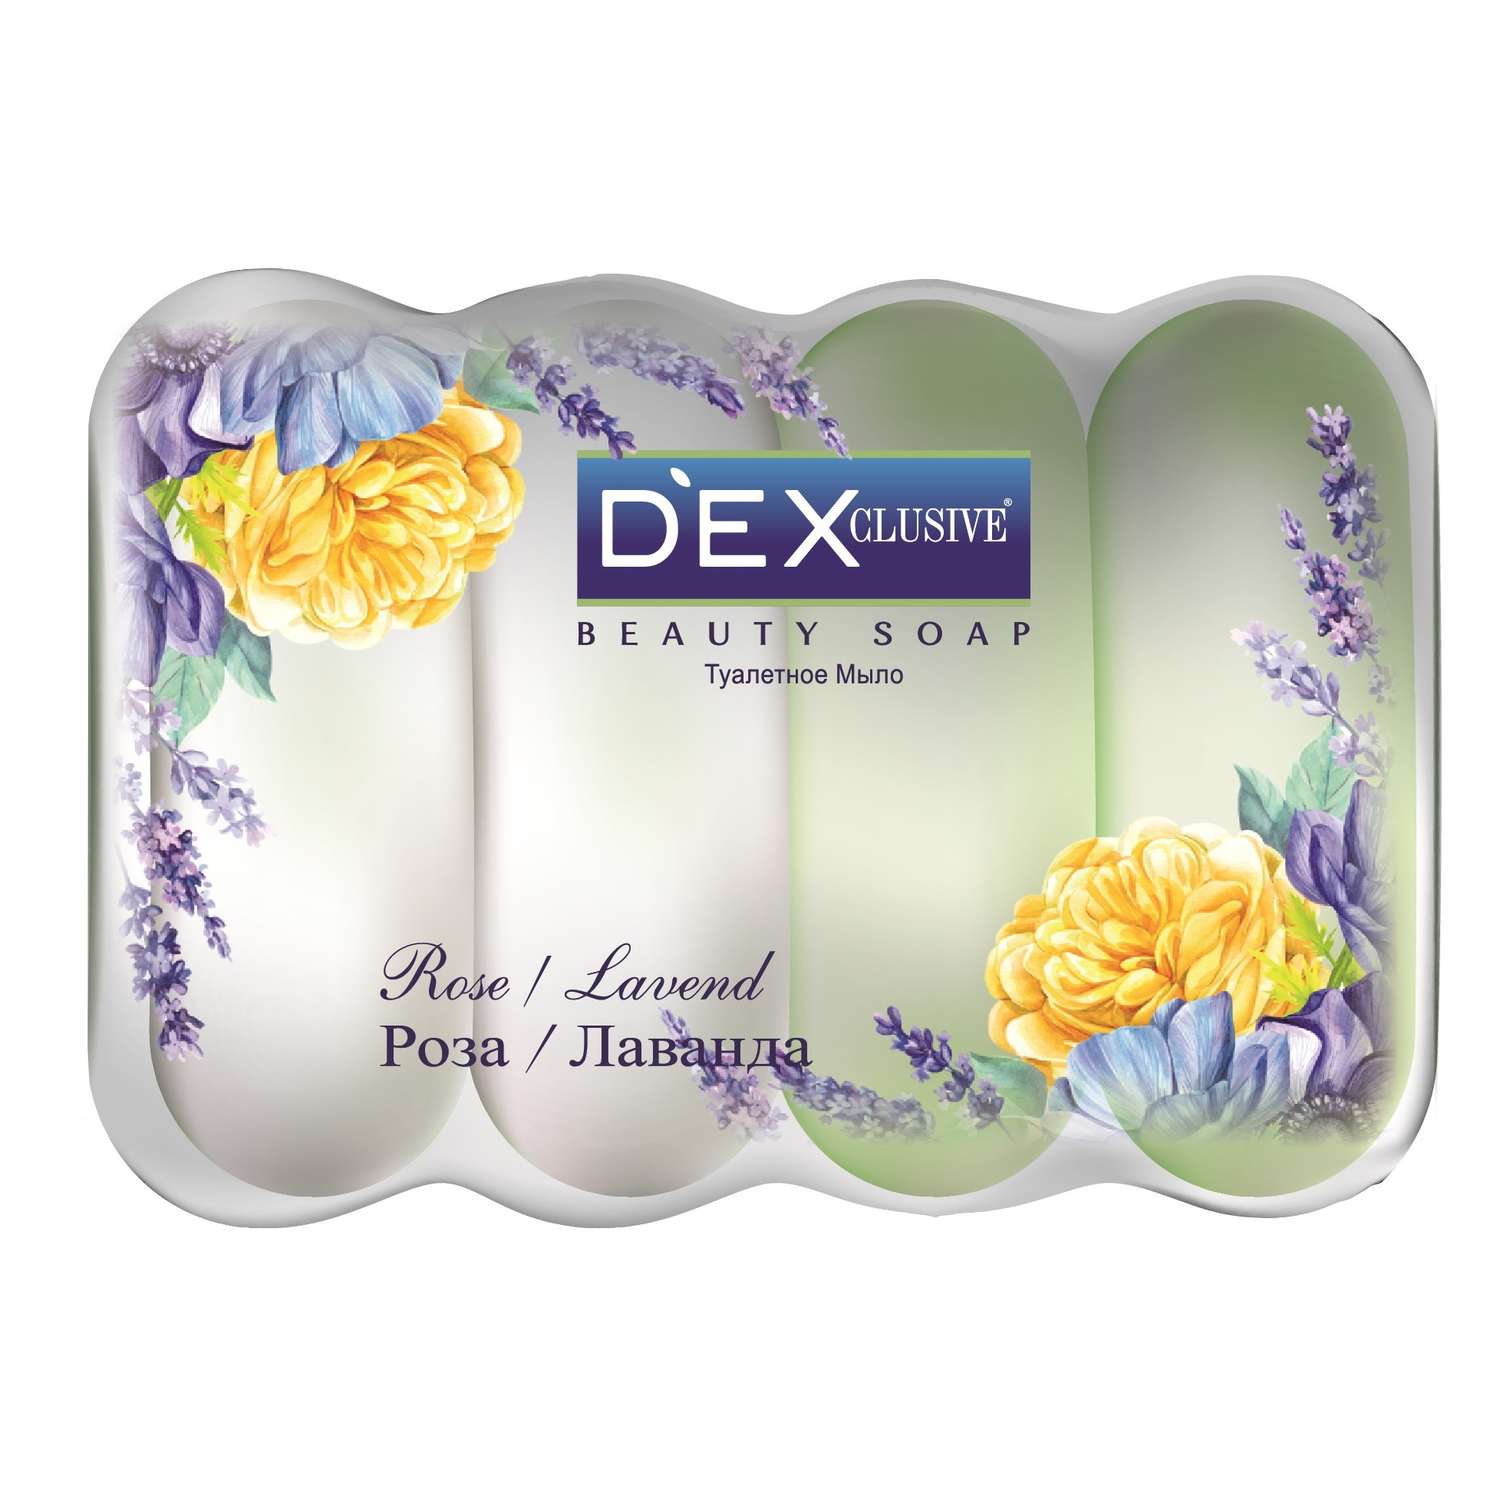 Мыло туалетное твёрдое Dexclusive rose and lavender 4шт по 85 гр - фото 1